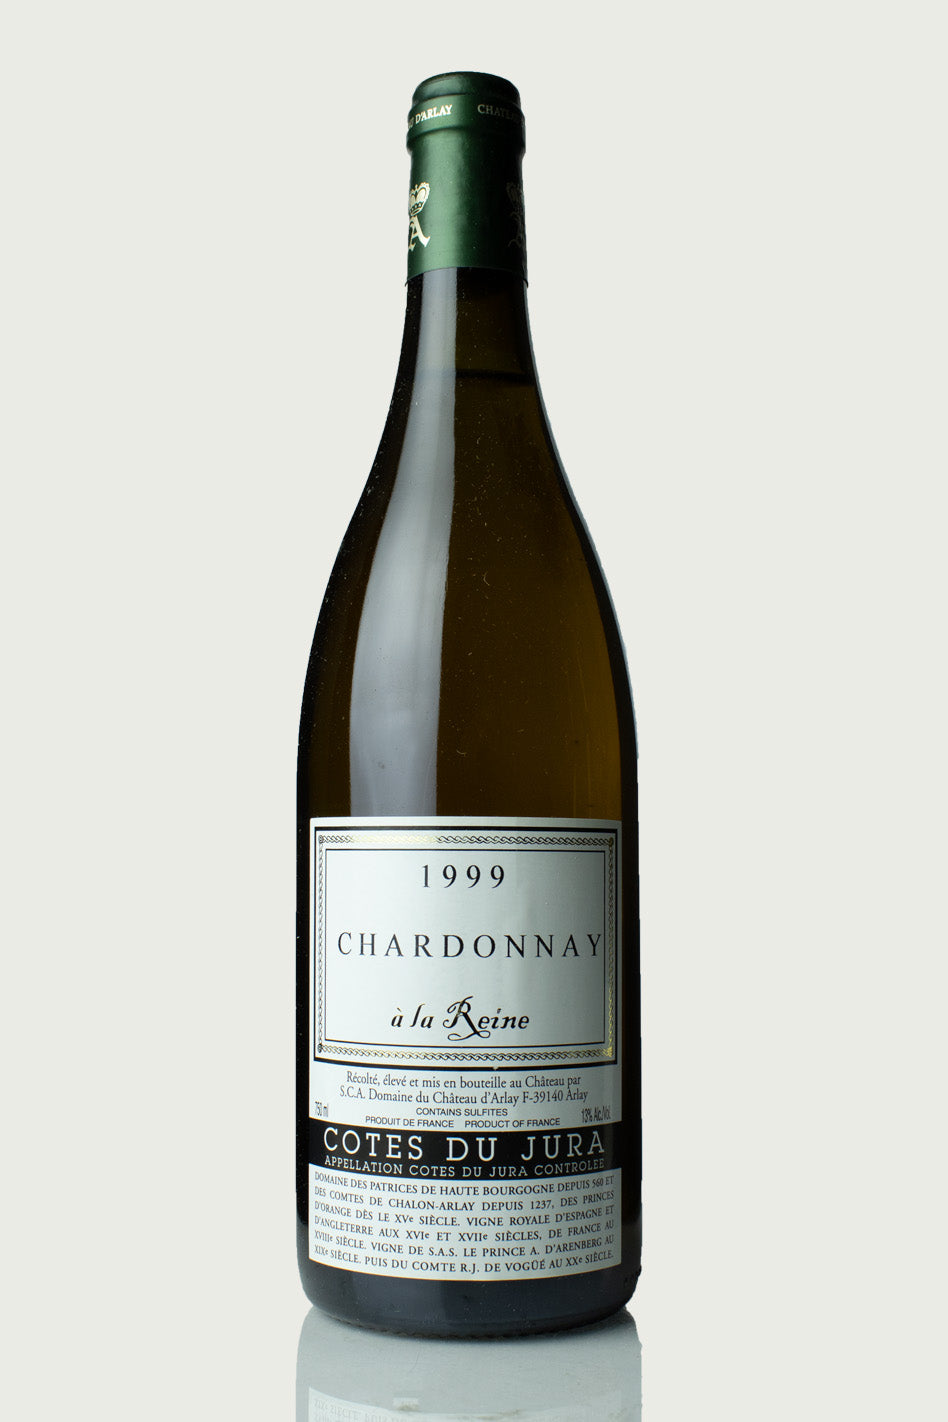 D'Arlay Côtes du Jura Chardonnay 'À La Reine' 1999